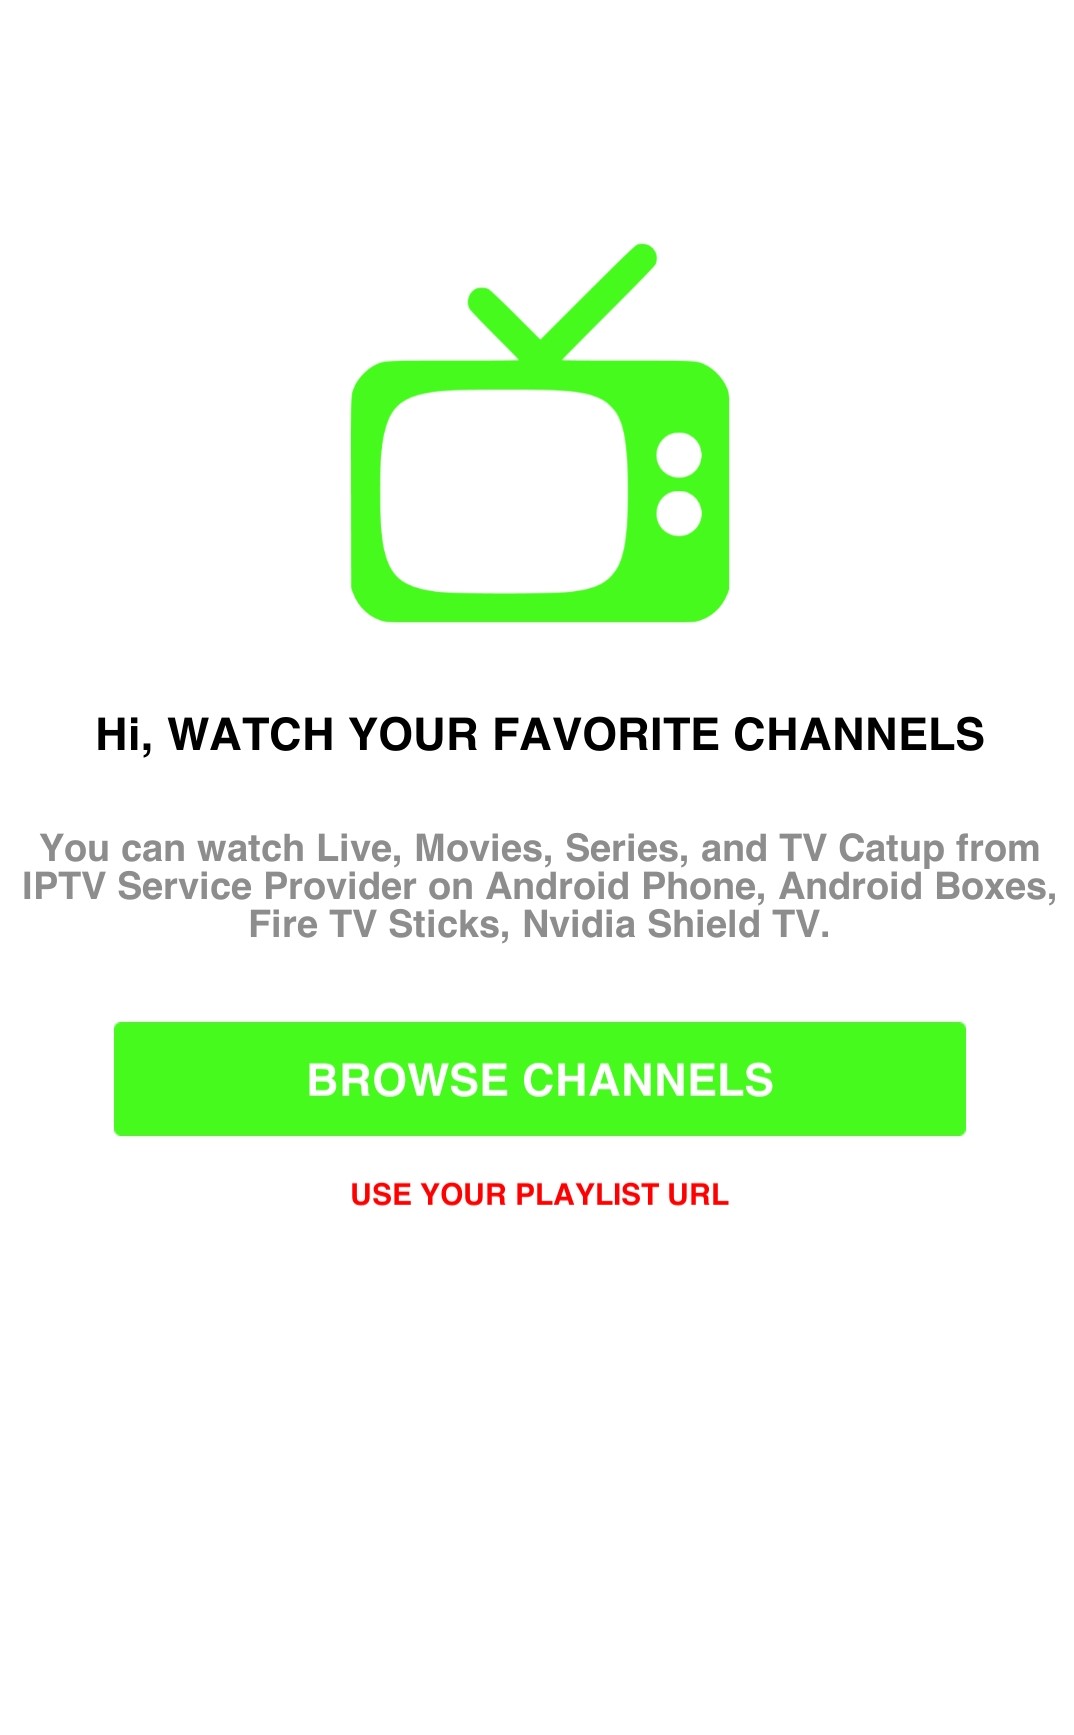 Select Use Your Playlist URL to stream Polar Media IPTV 